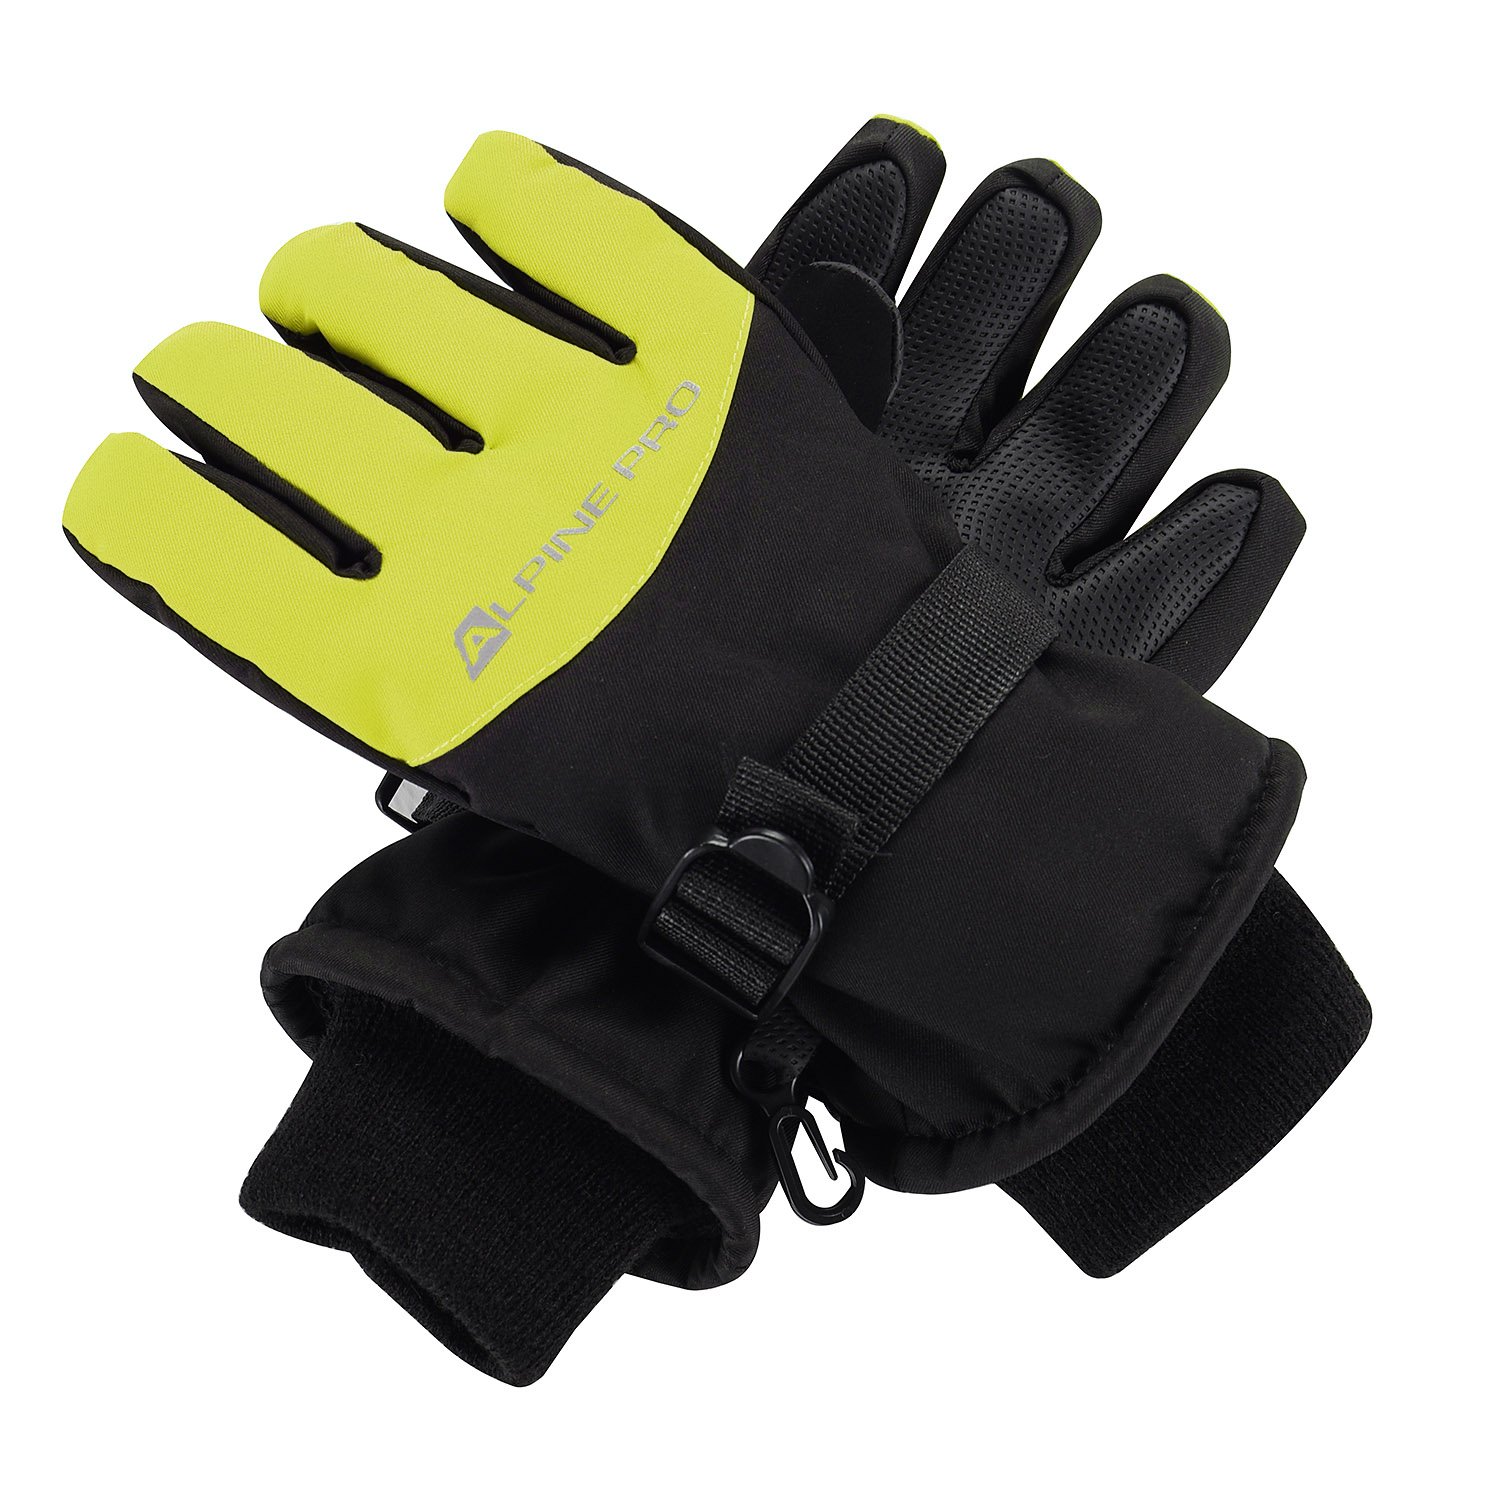 Children's gloves with ptx membrane ALPINE PRO LORDO sulphur spring